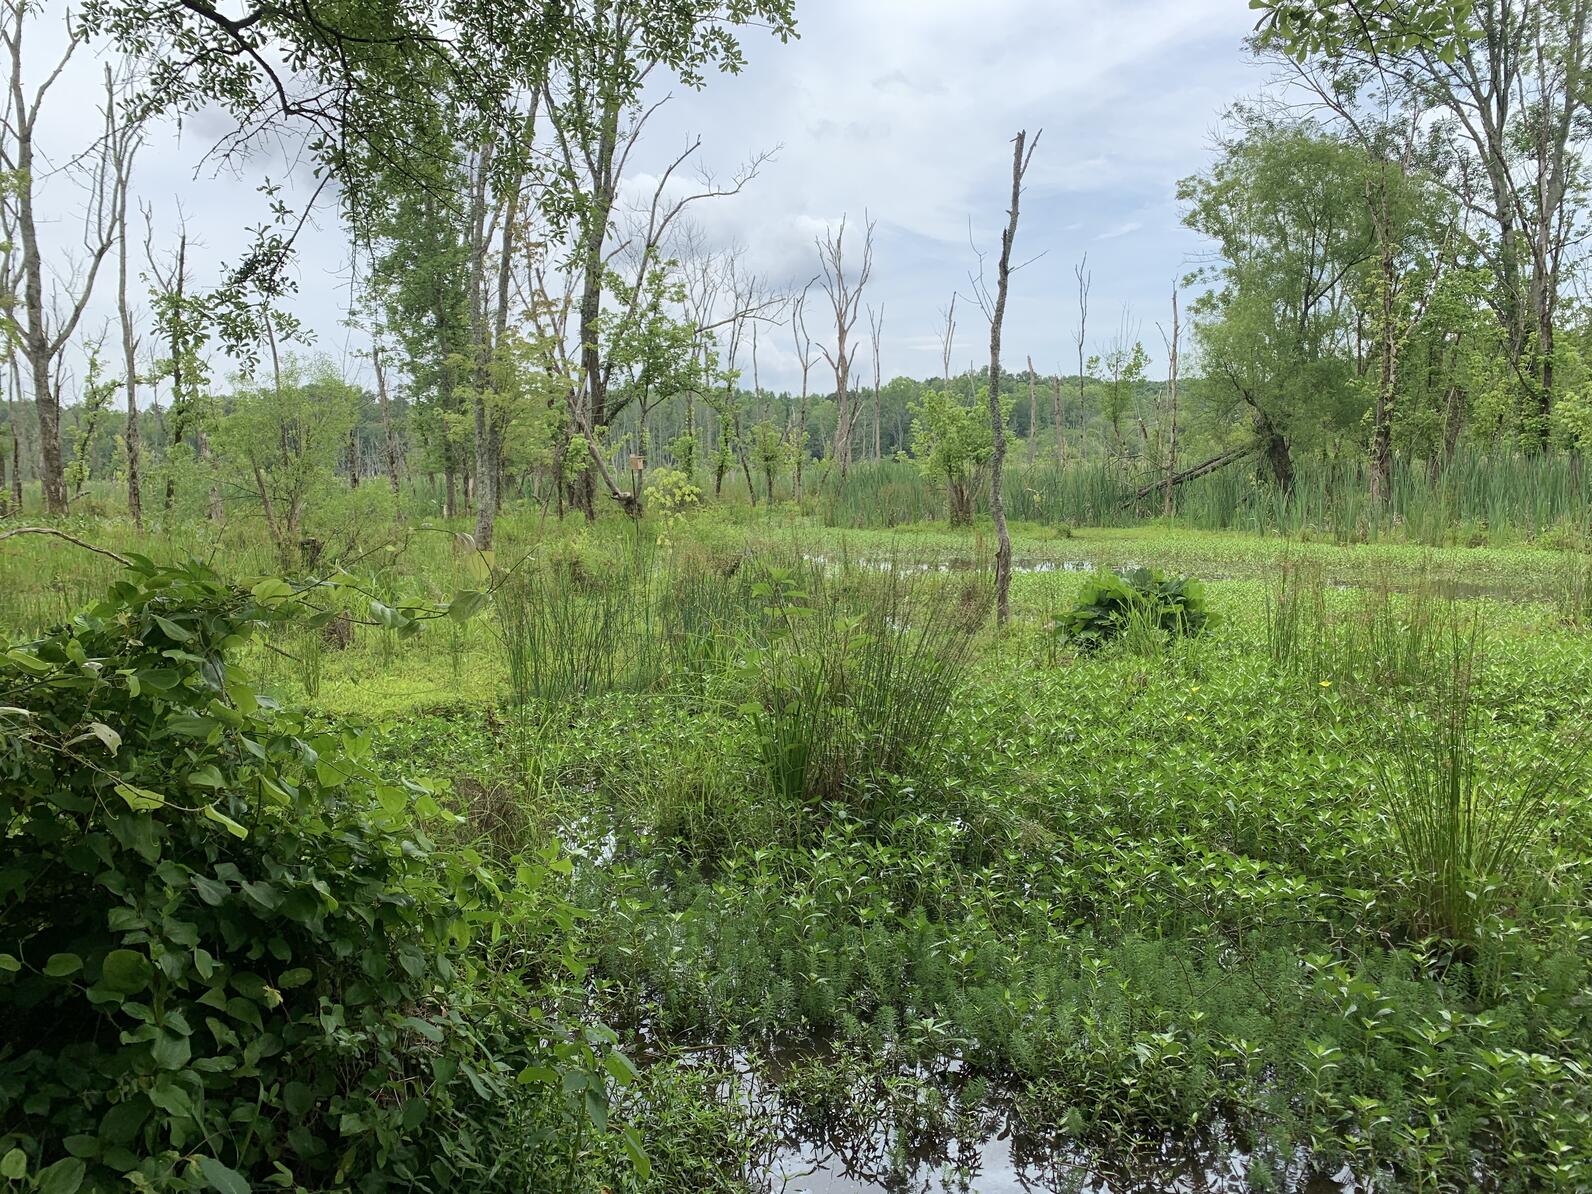 a lush green wetland landscape set in front of a hardwood forest treeline